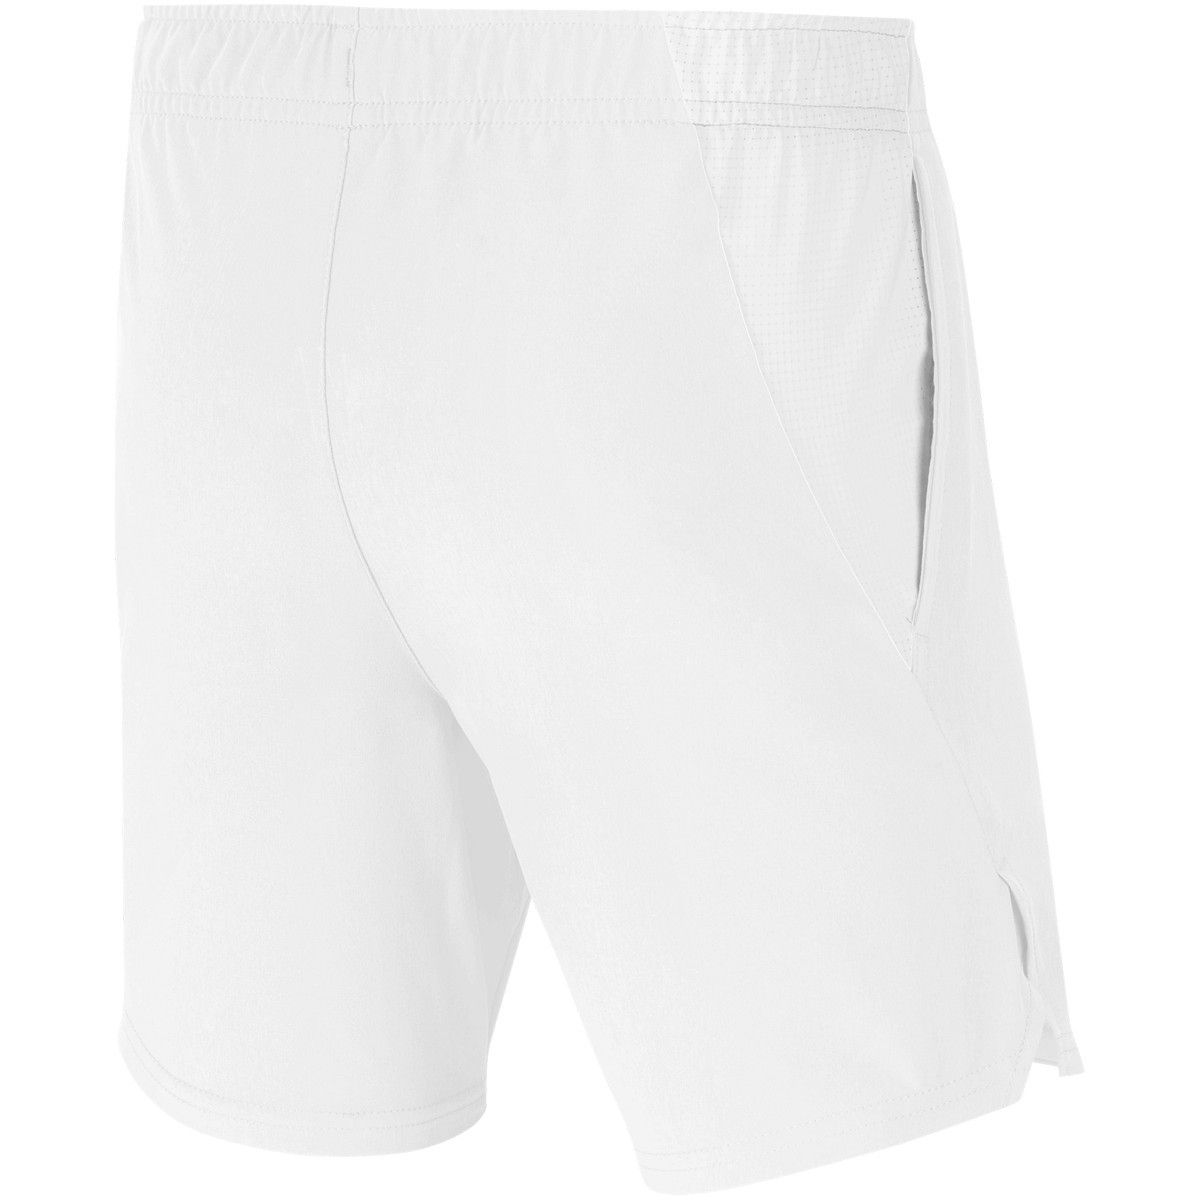 NikeCourt Flex Ace Boy's Tennis Shorts CI9409-100